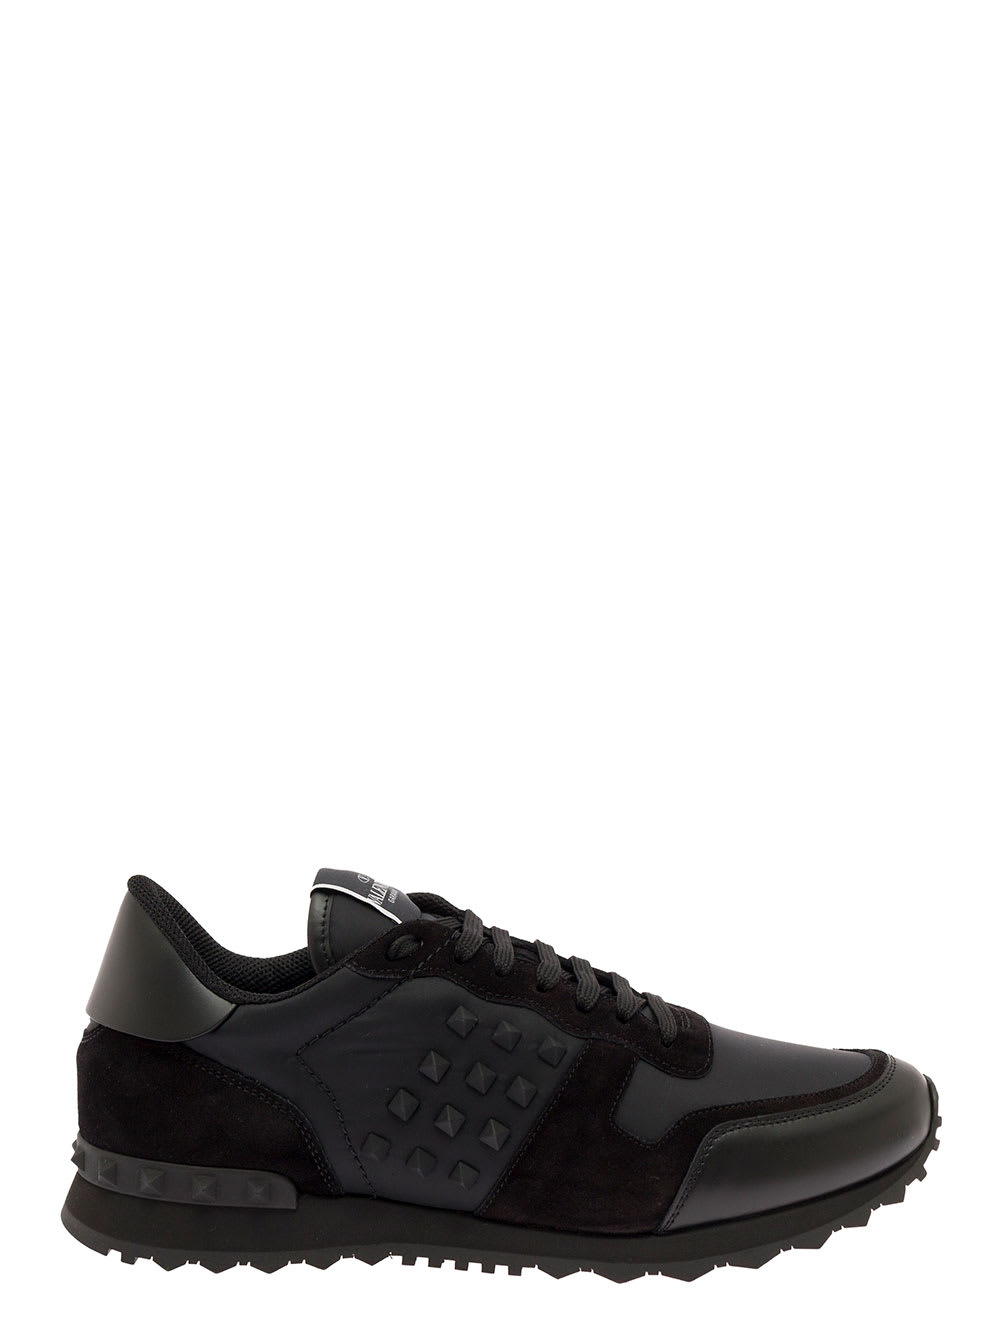 Black Leather And Nylon Rockstud Sneakers Man Valentino Garavani